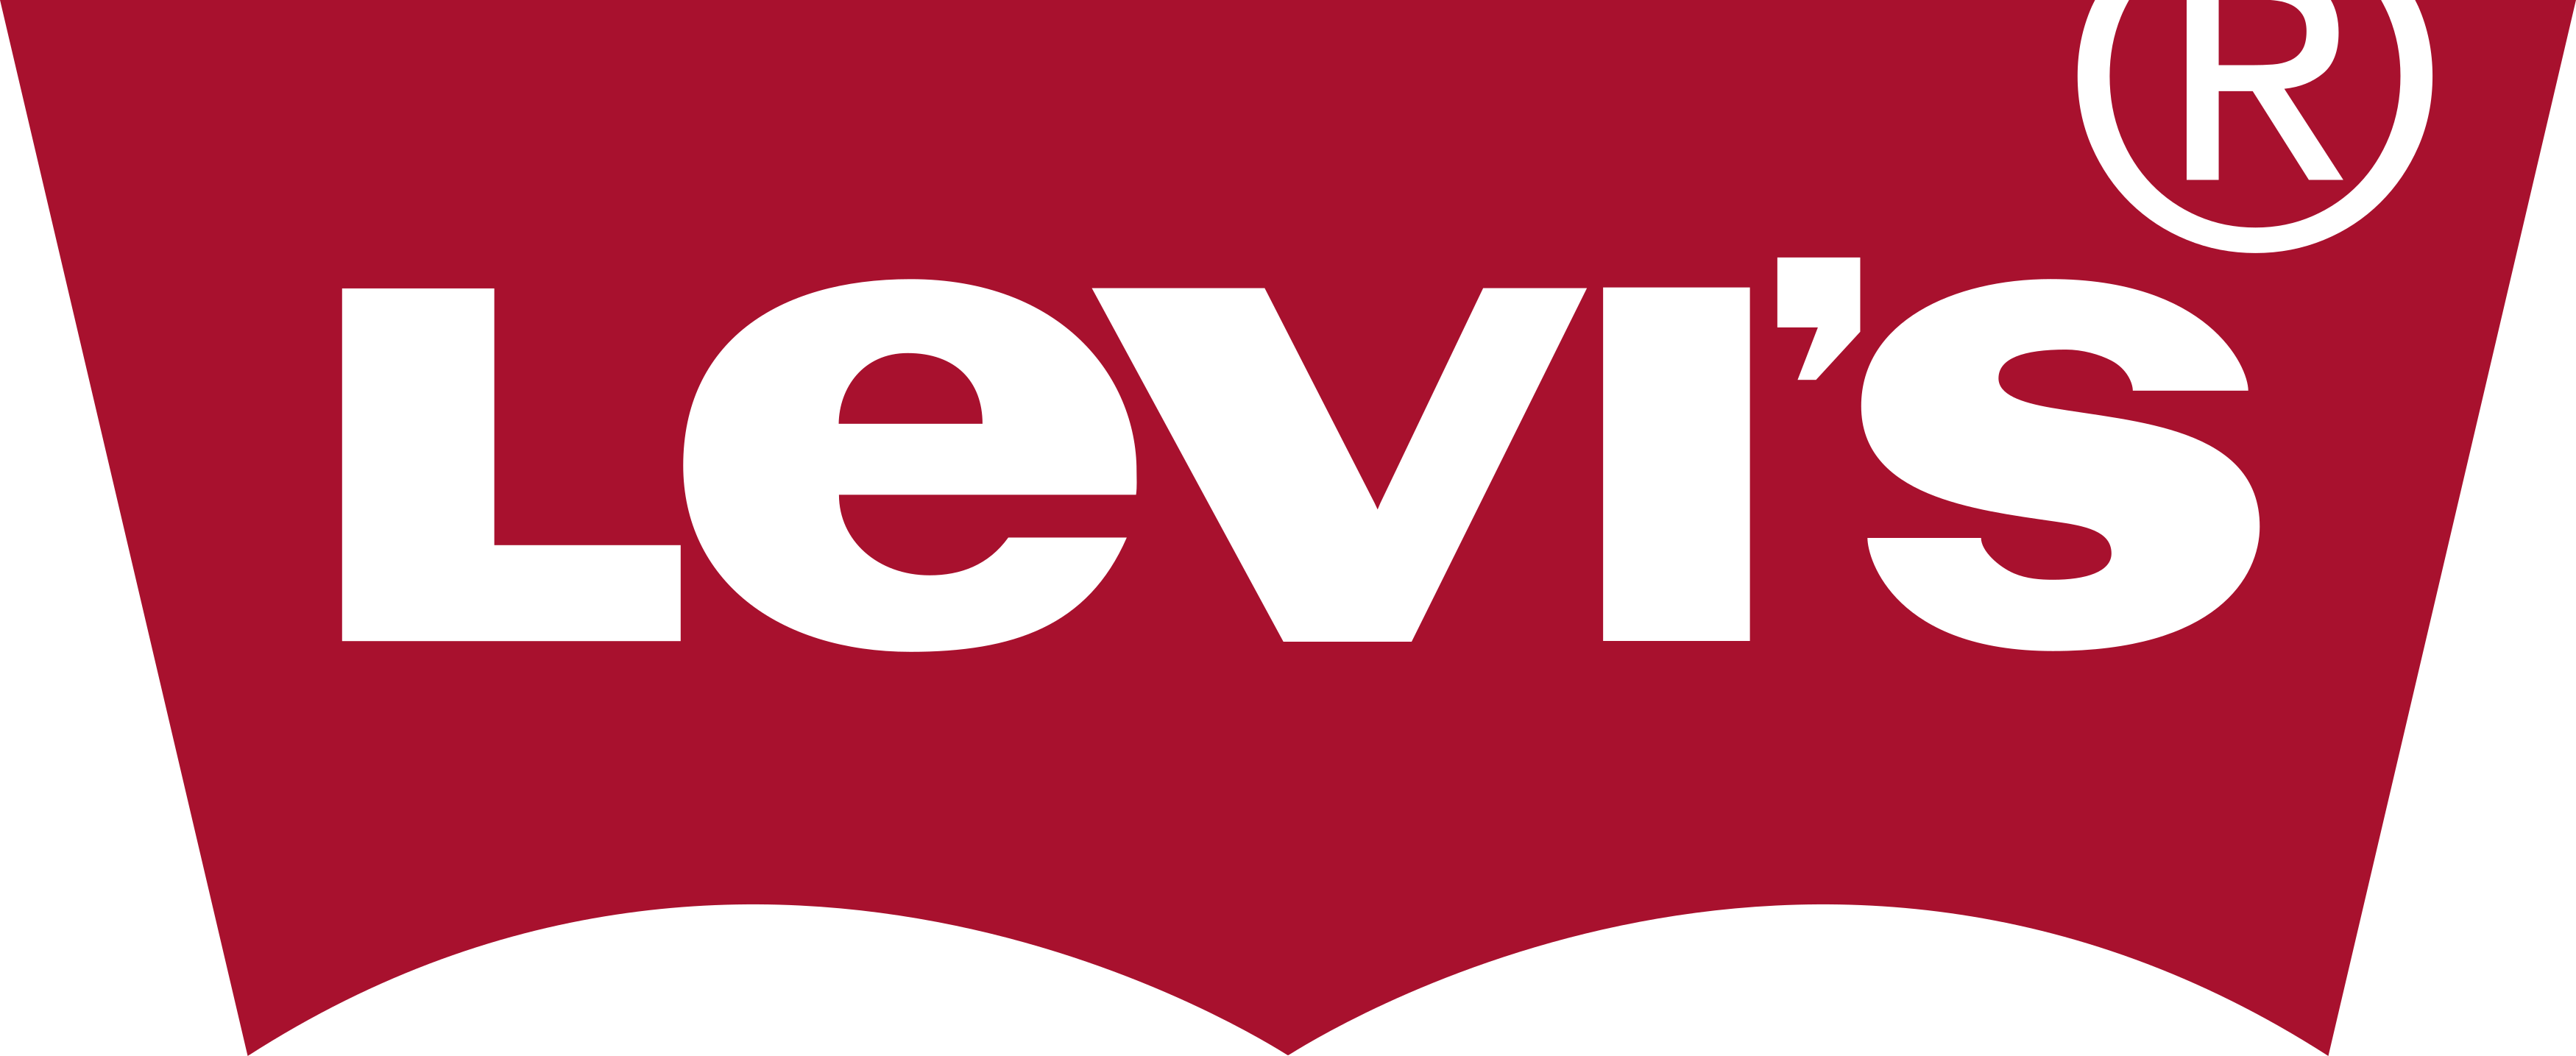 levis logo - Levi's Logo